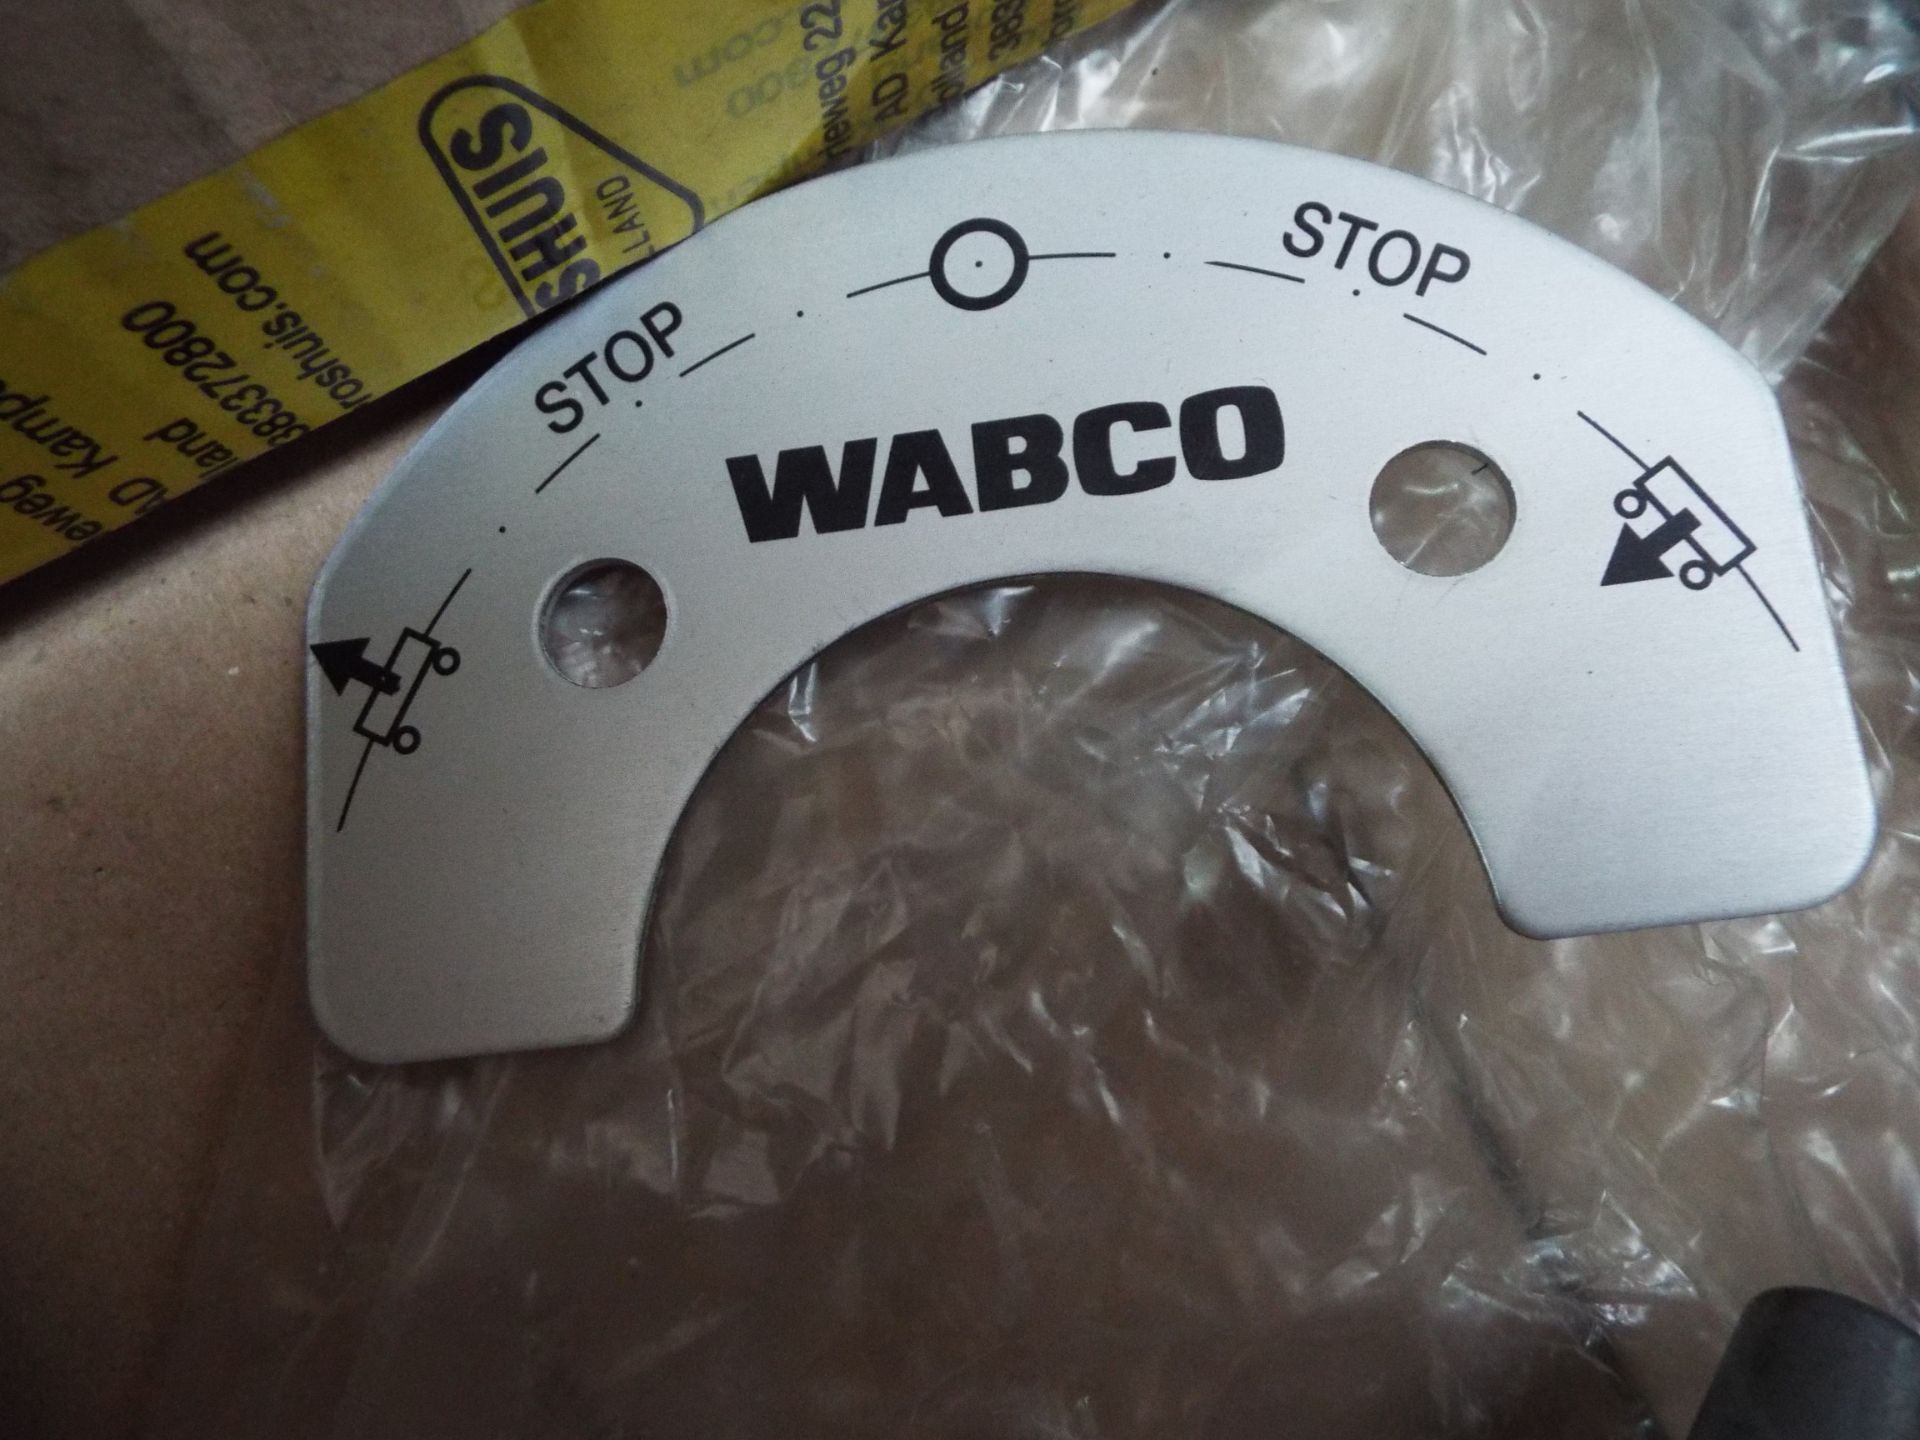 7 x Wabco Rotary Slide Valves P/No 4630321200 - Image 6 of 6